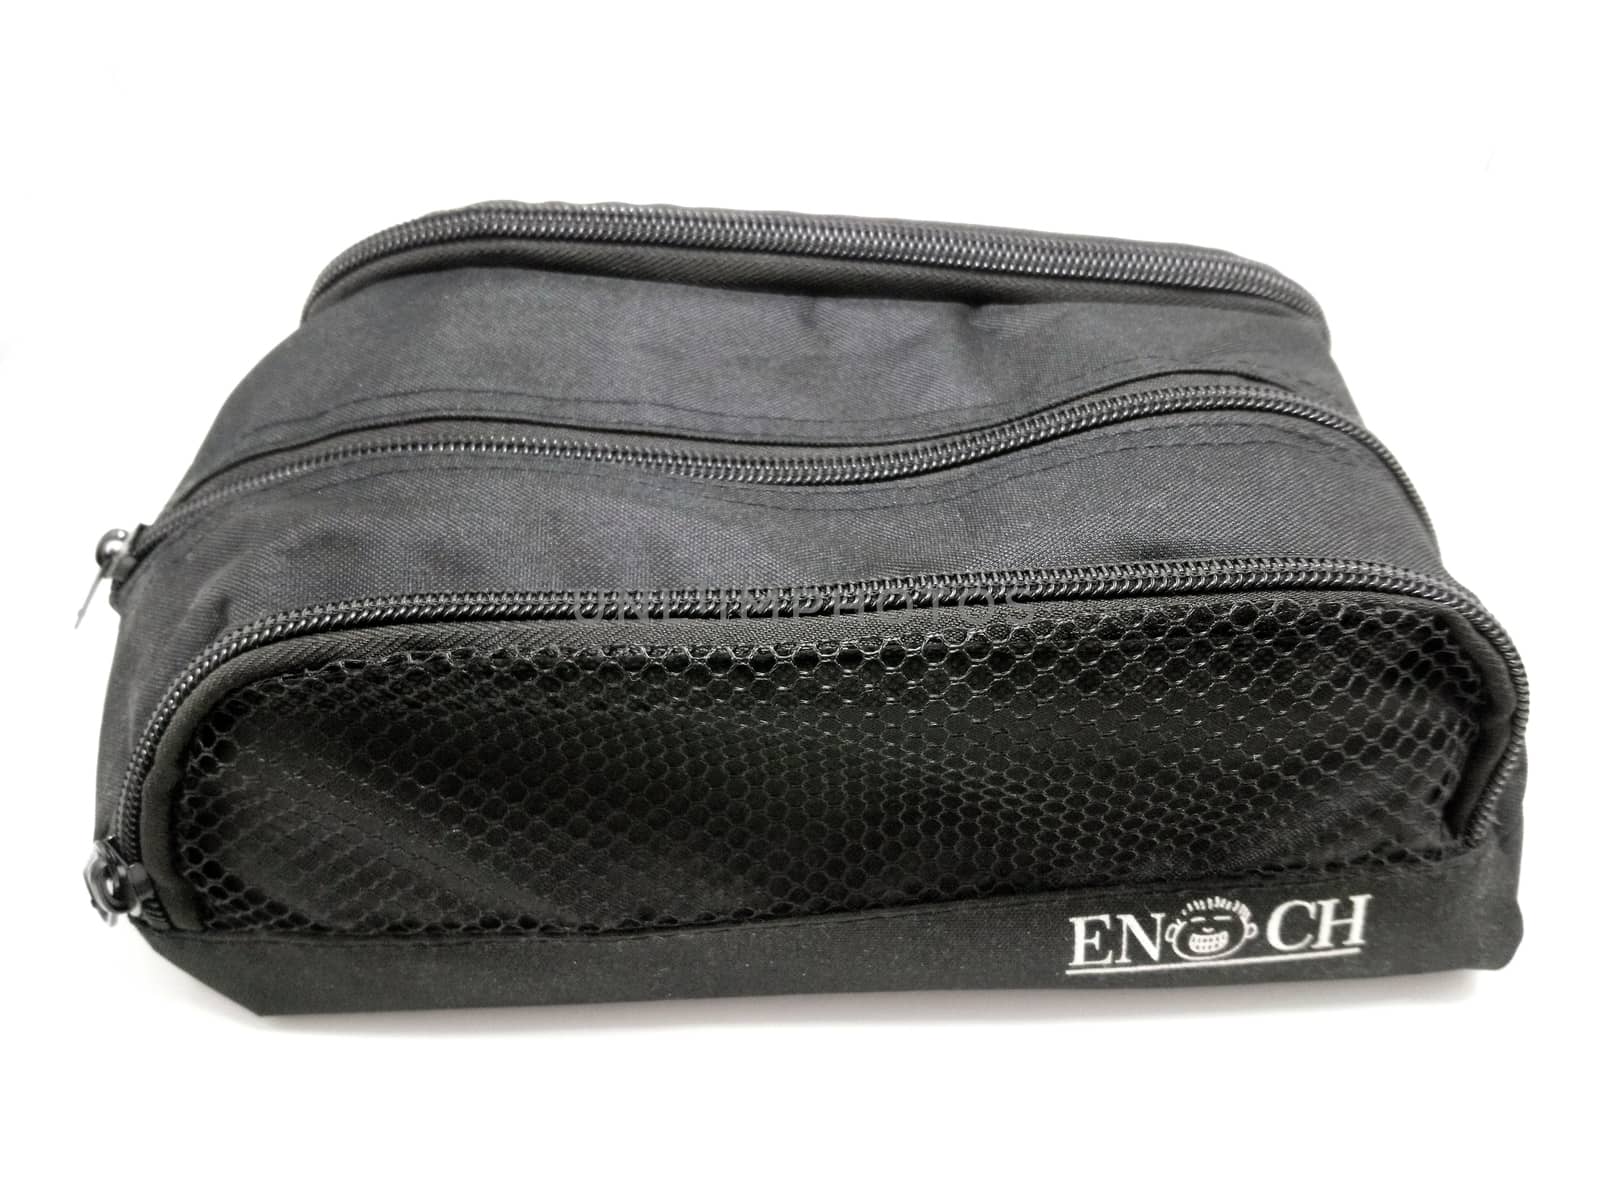 MANILA, PH - JUNE 23 - Enoch black portable pouch on June 23, 2020 in Manila, Philippines.